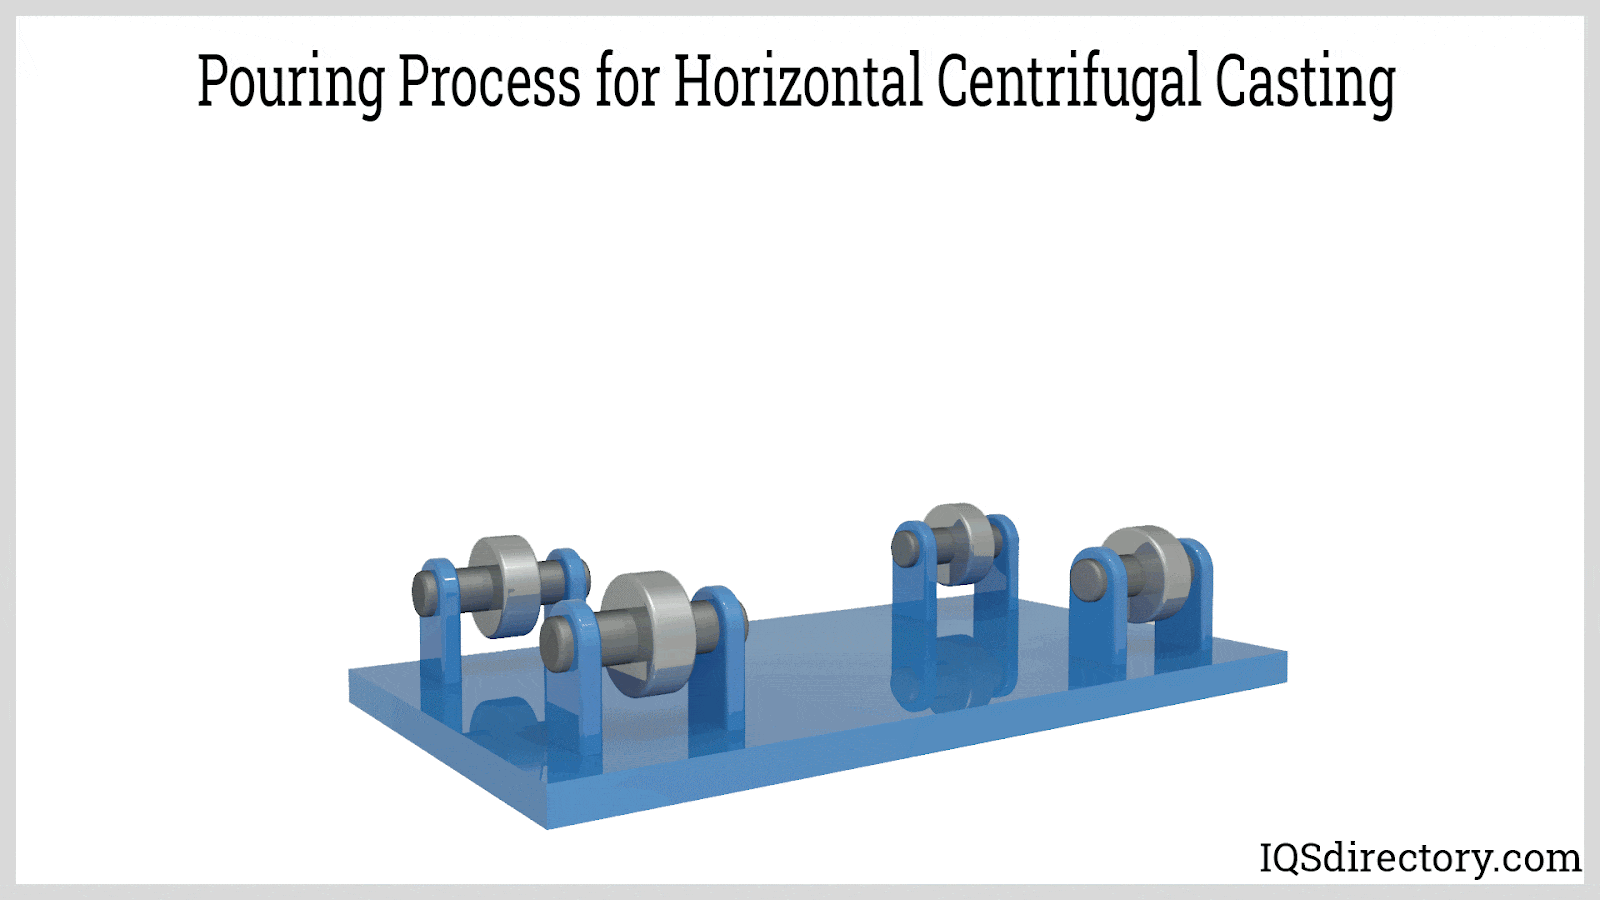 Pouring Process for Horizontal Centrifugal Casting